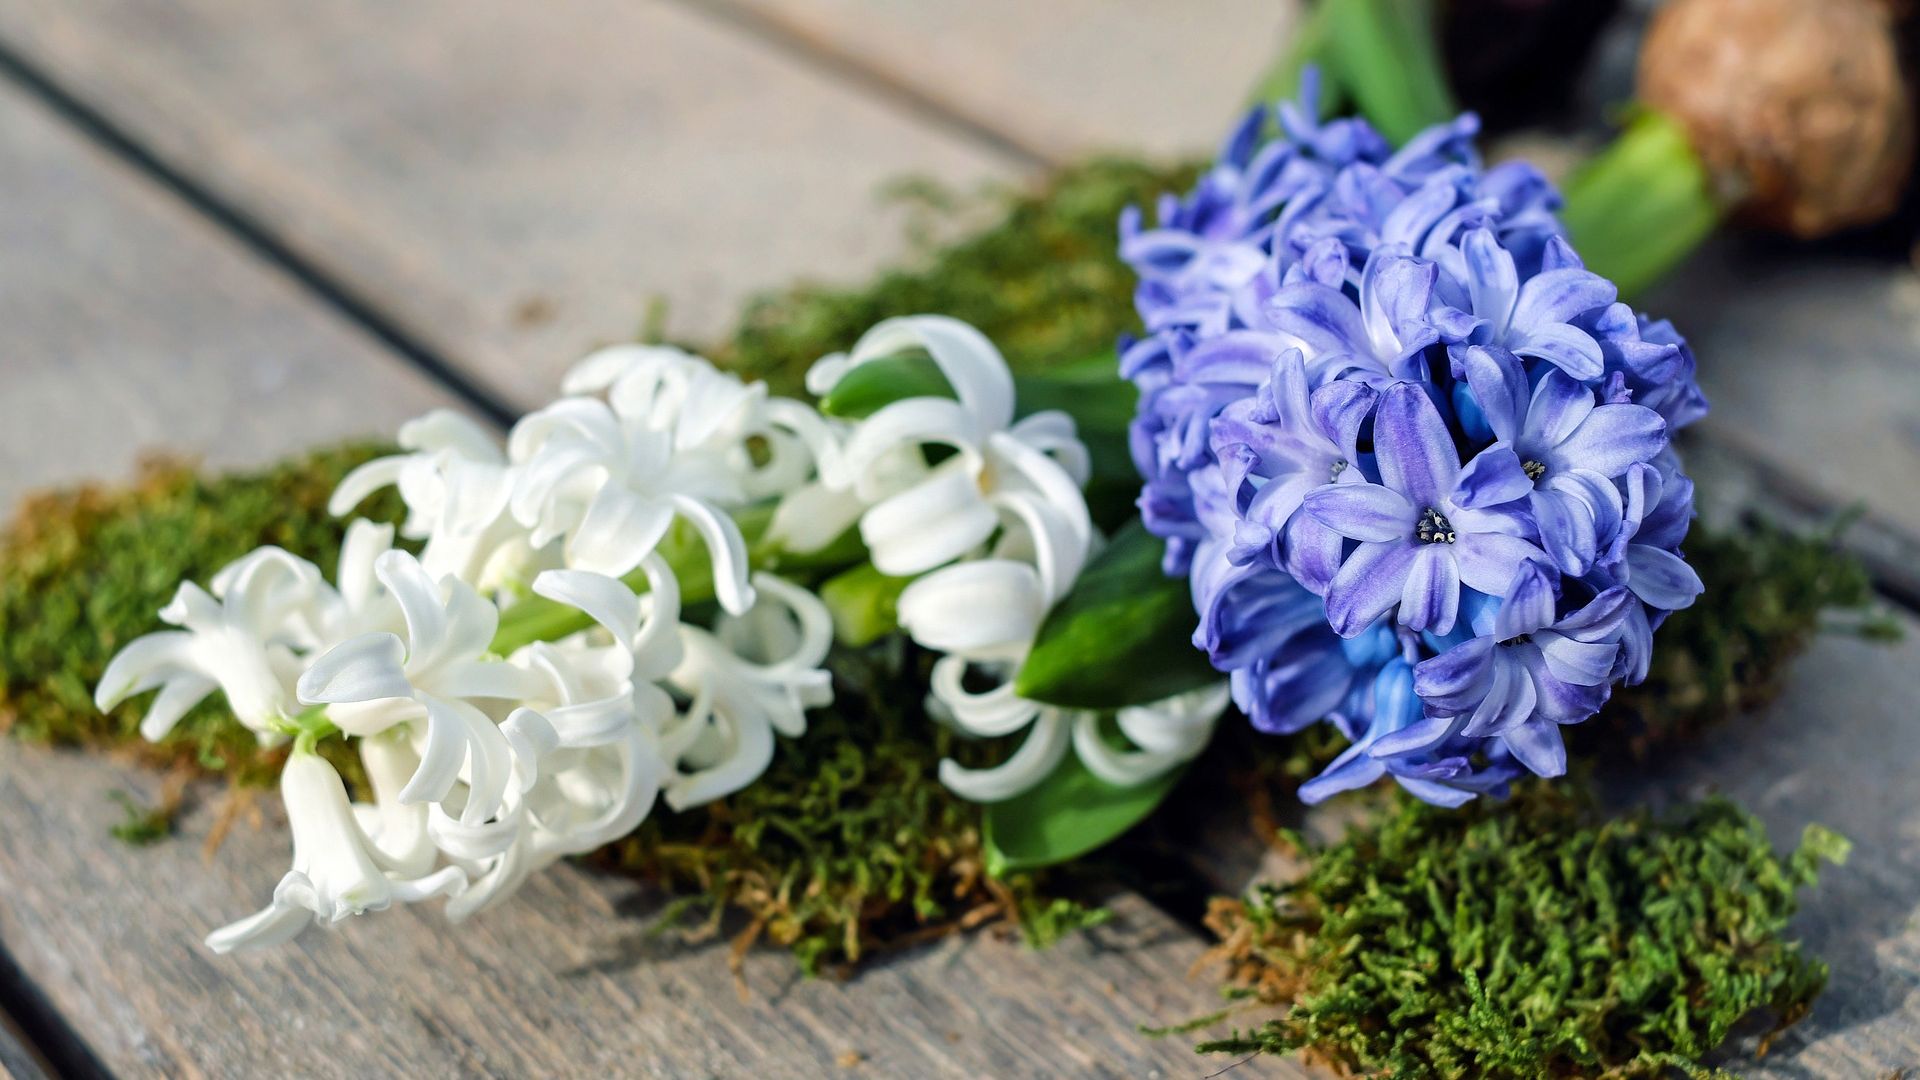 Wallpaper Hyacinth, white & purple flowers